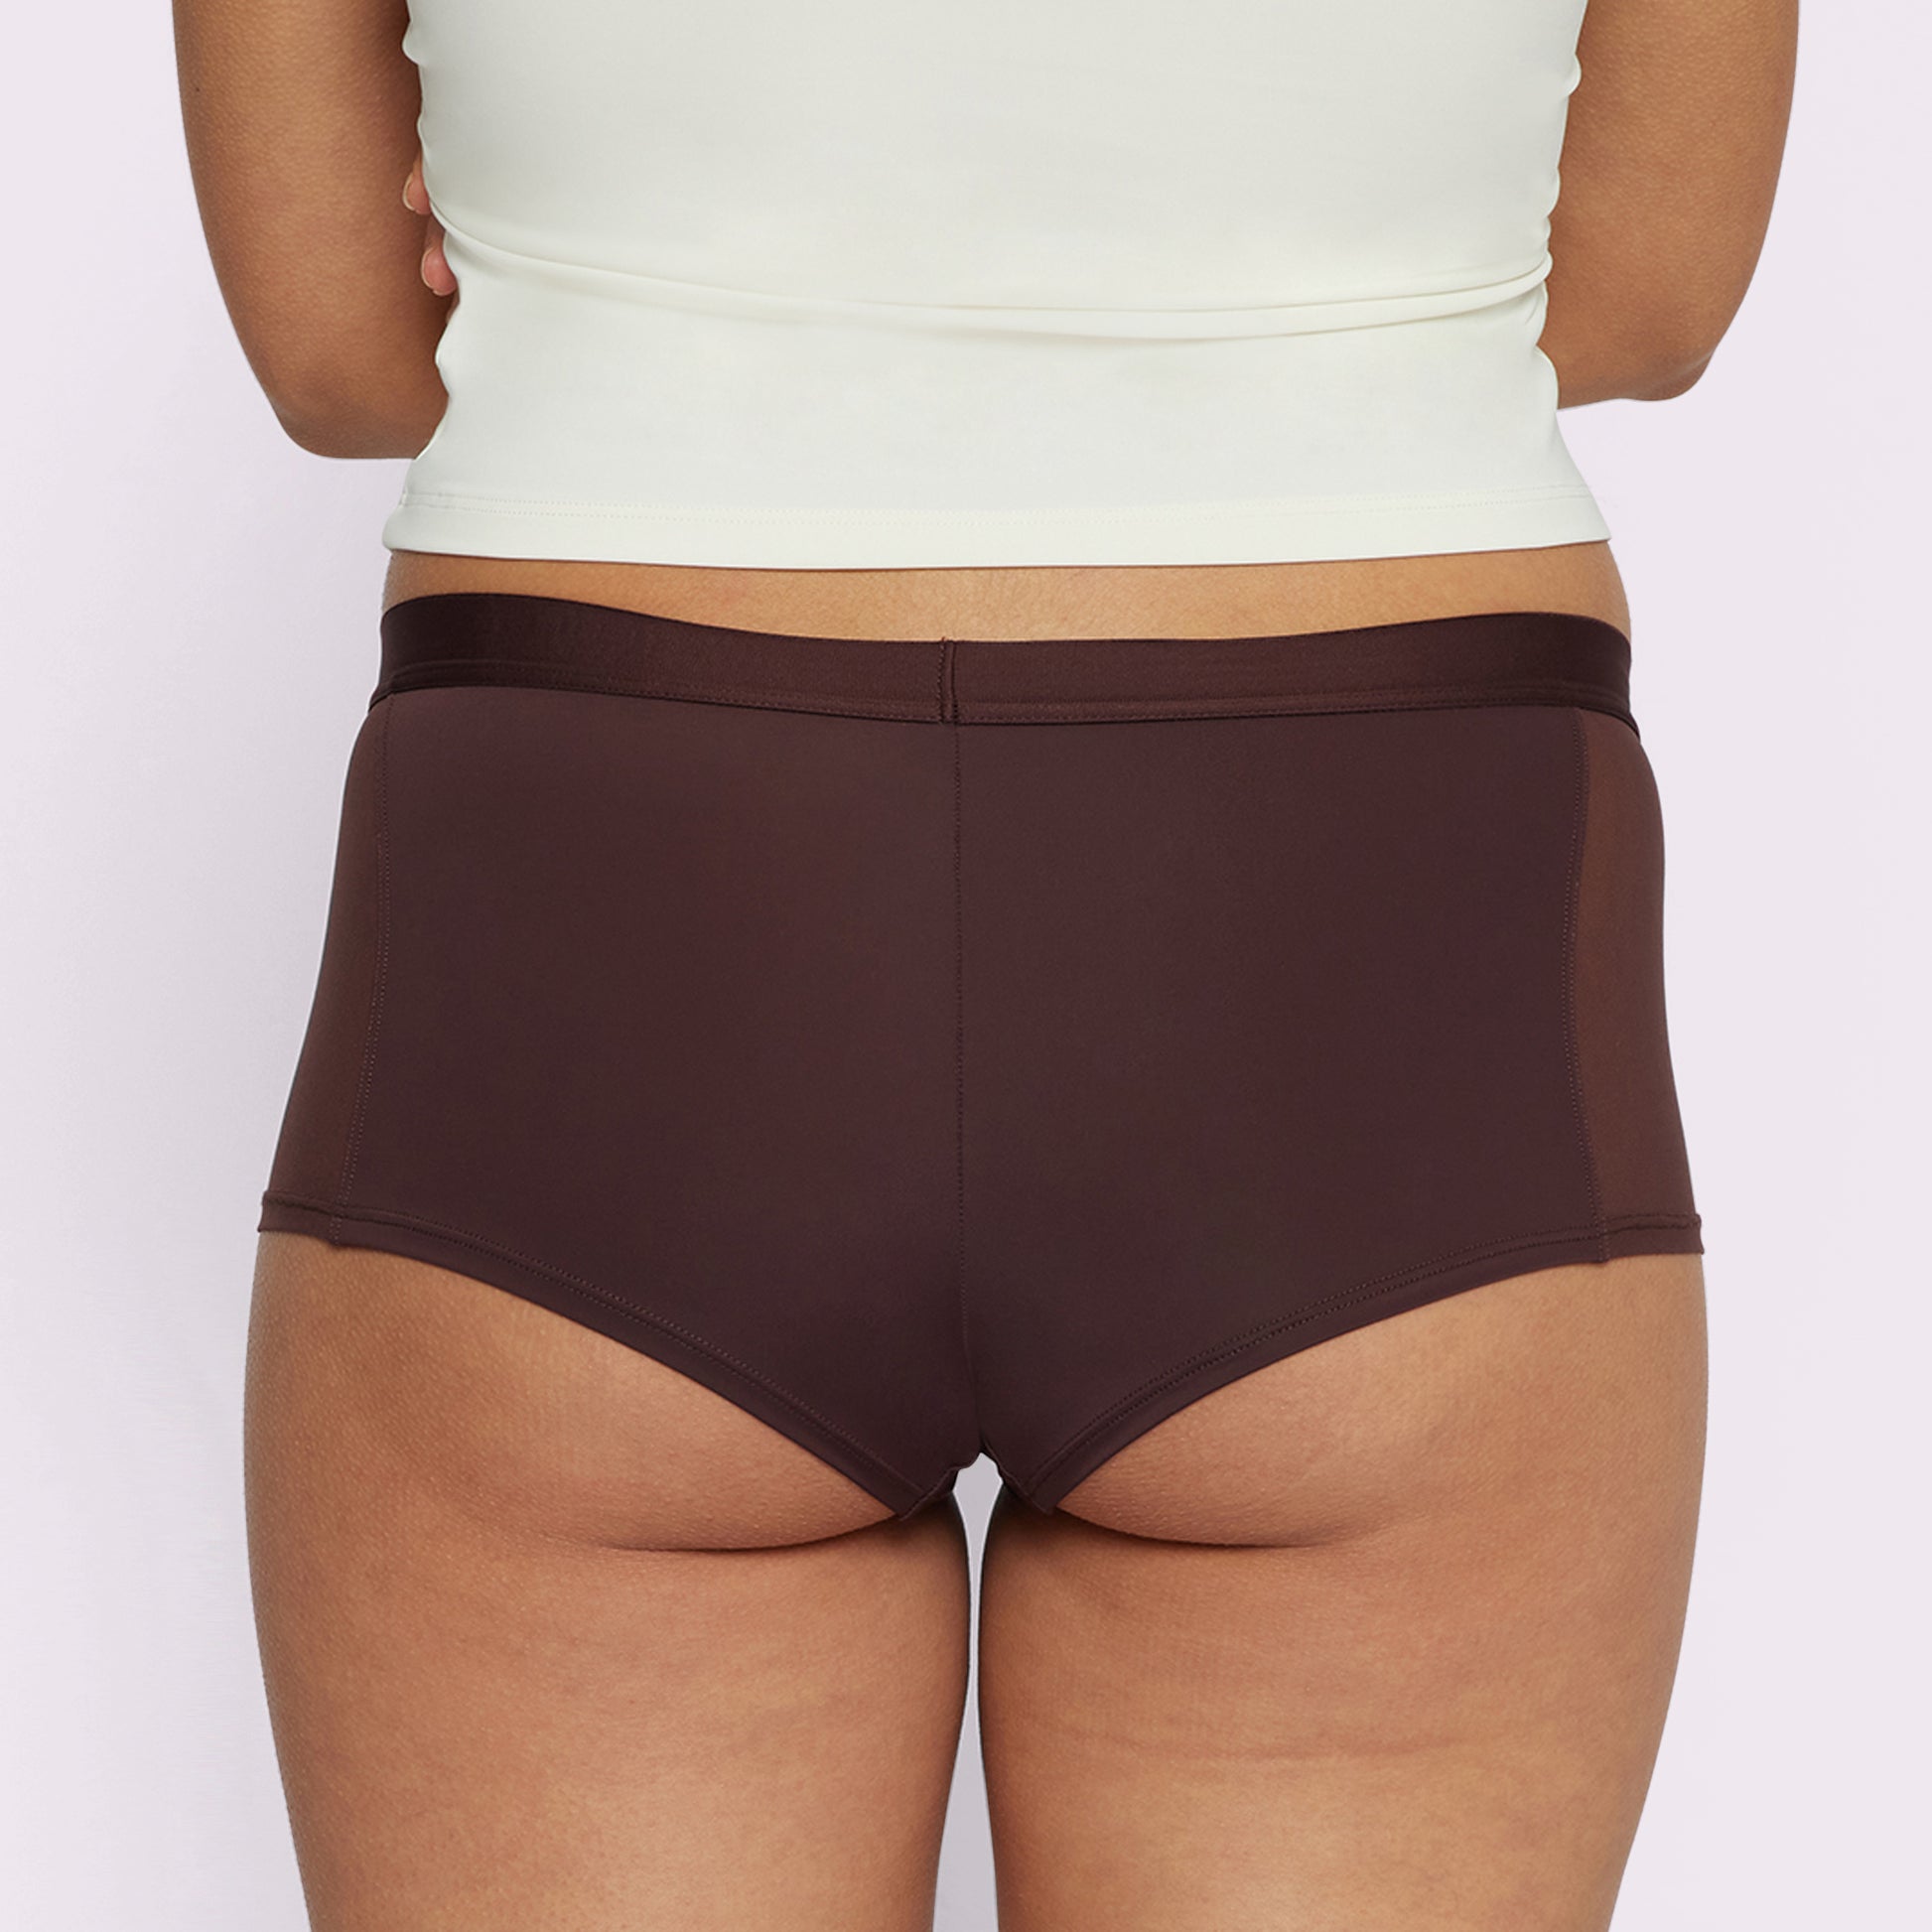 Trendlet: Boy shorts (for women)